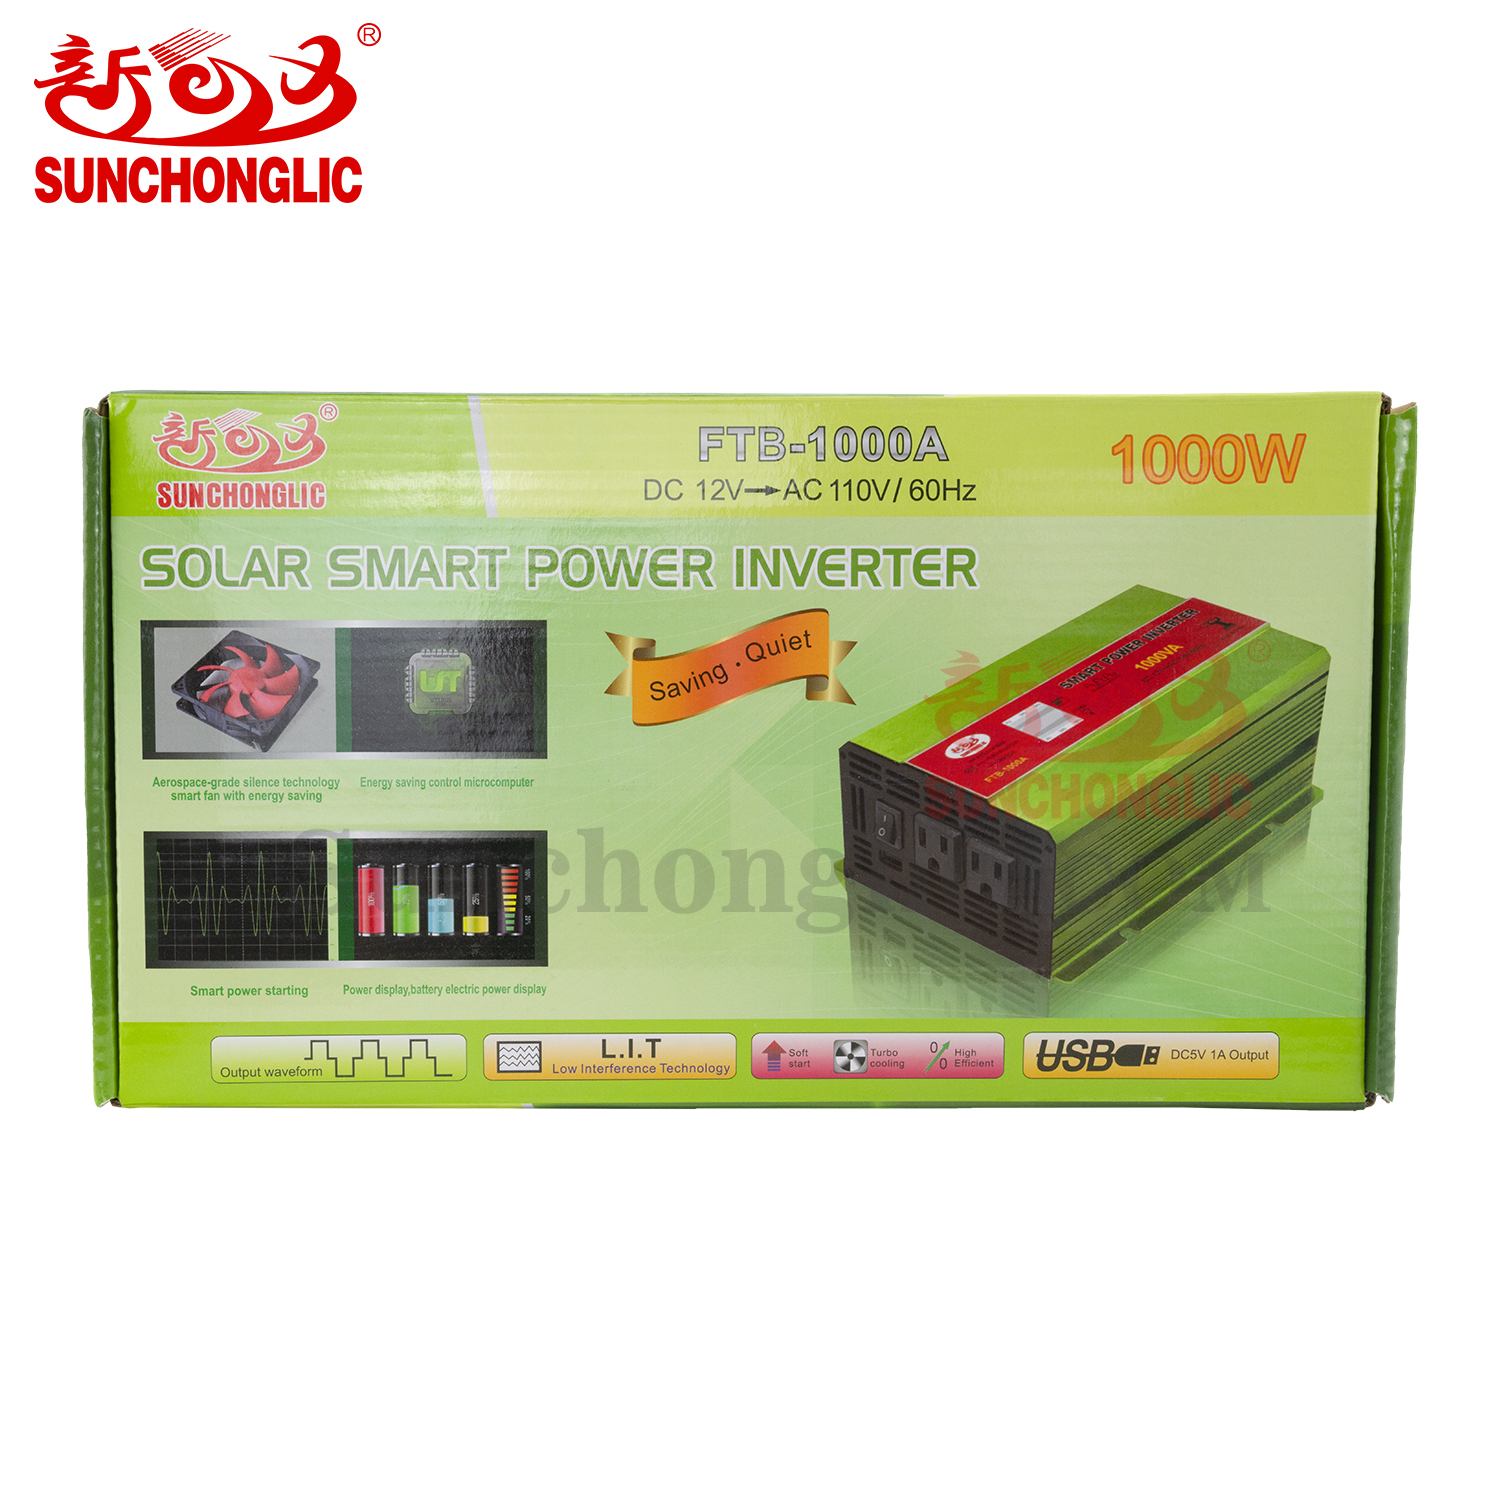 Modified Inverter 110V - FTB-1000A